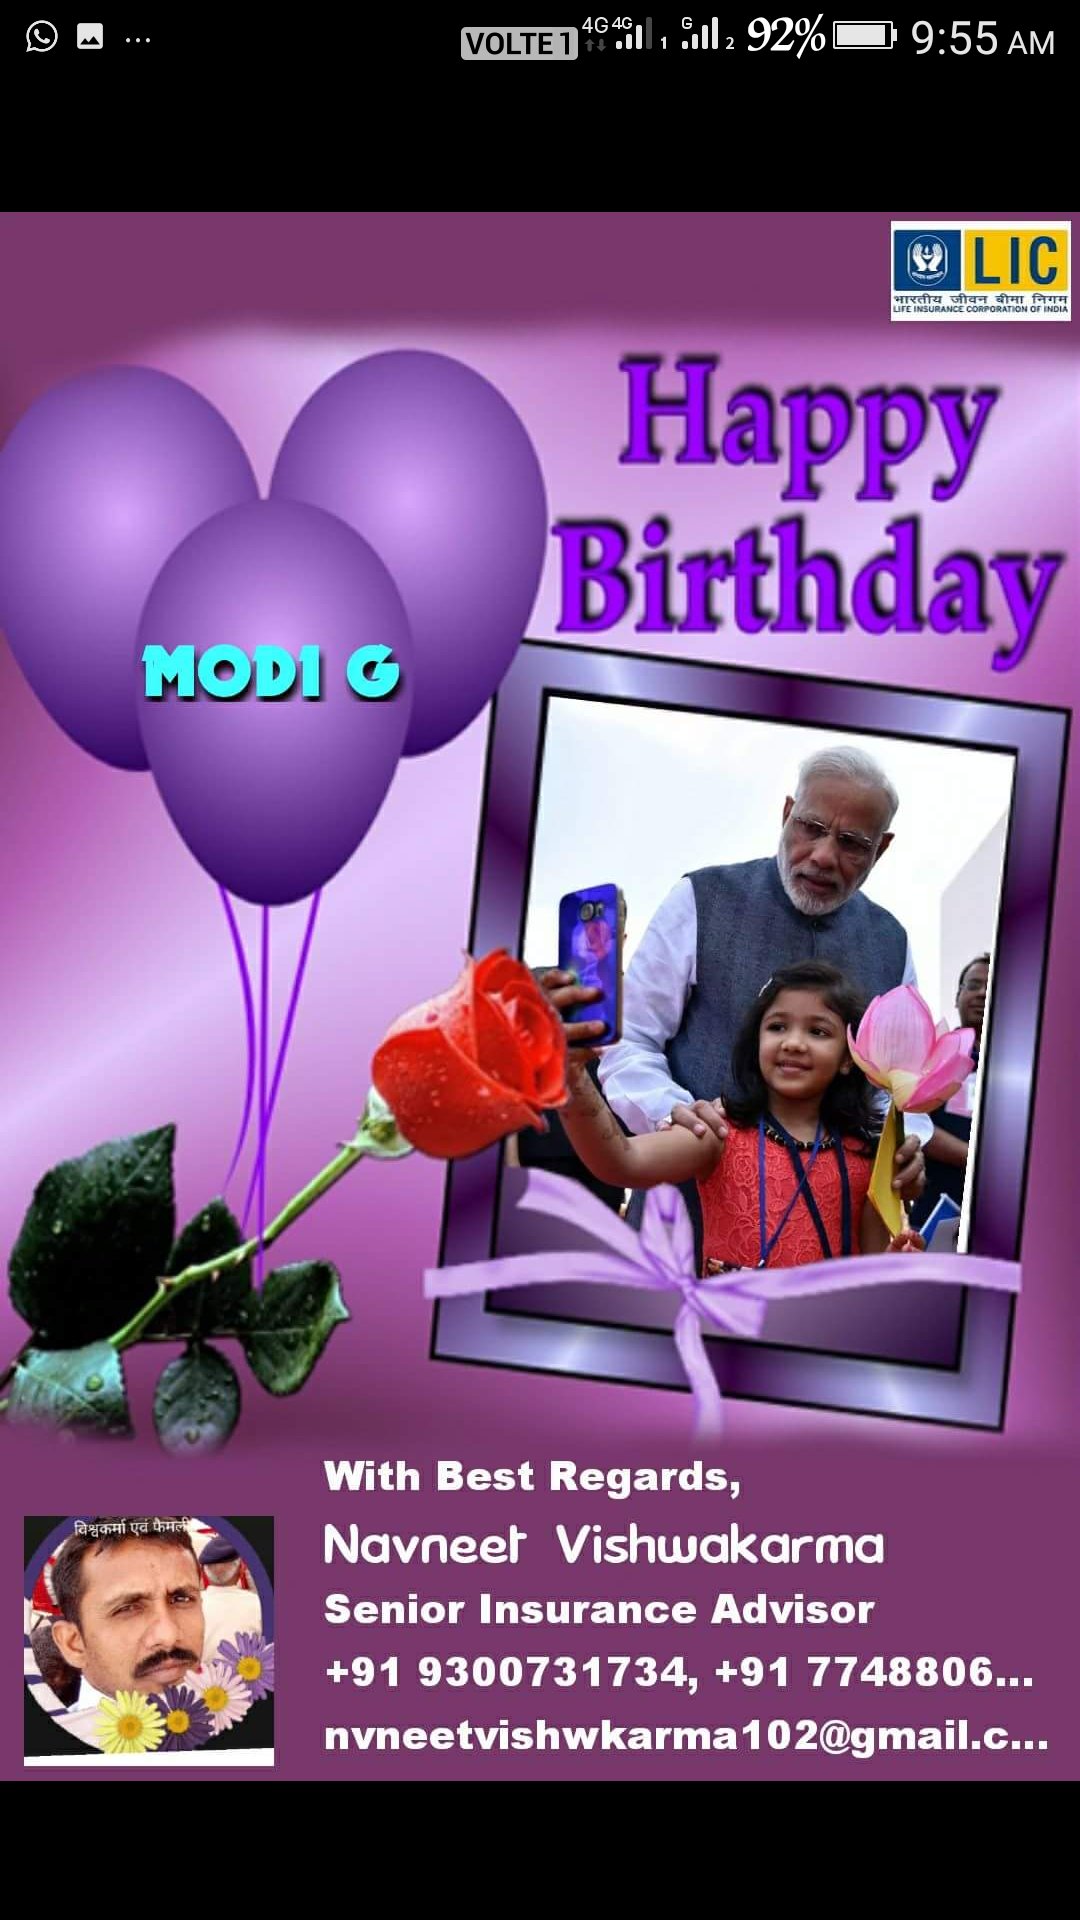 Wish you happy birthday to you Prim Minister Narendra Modi g.... 